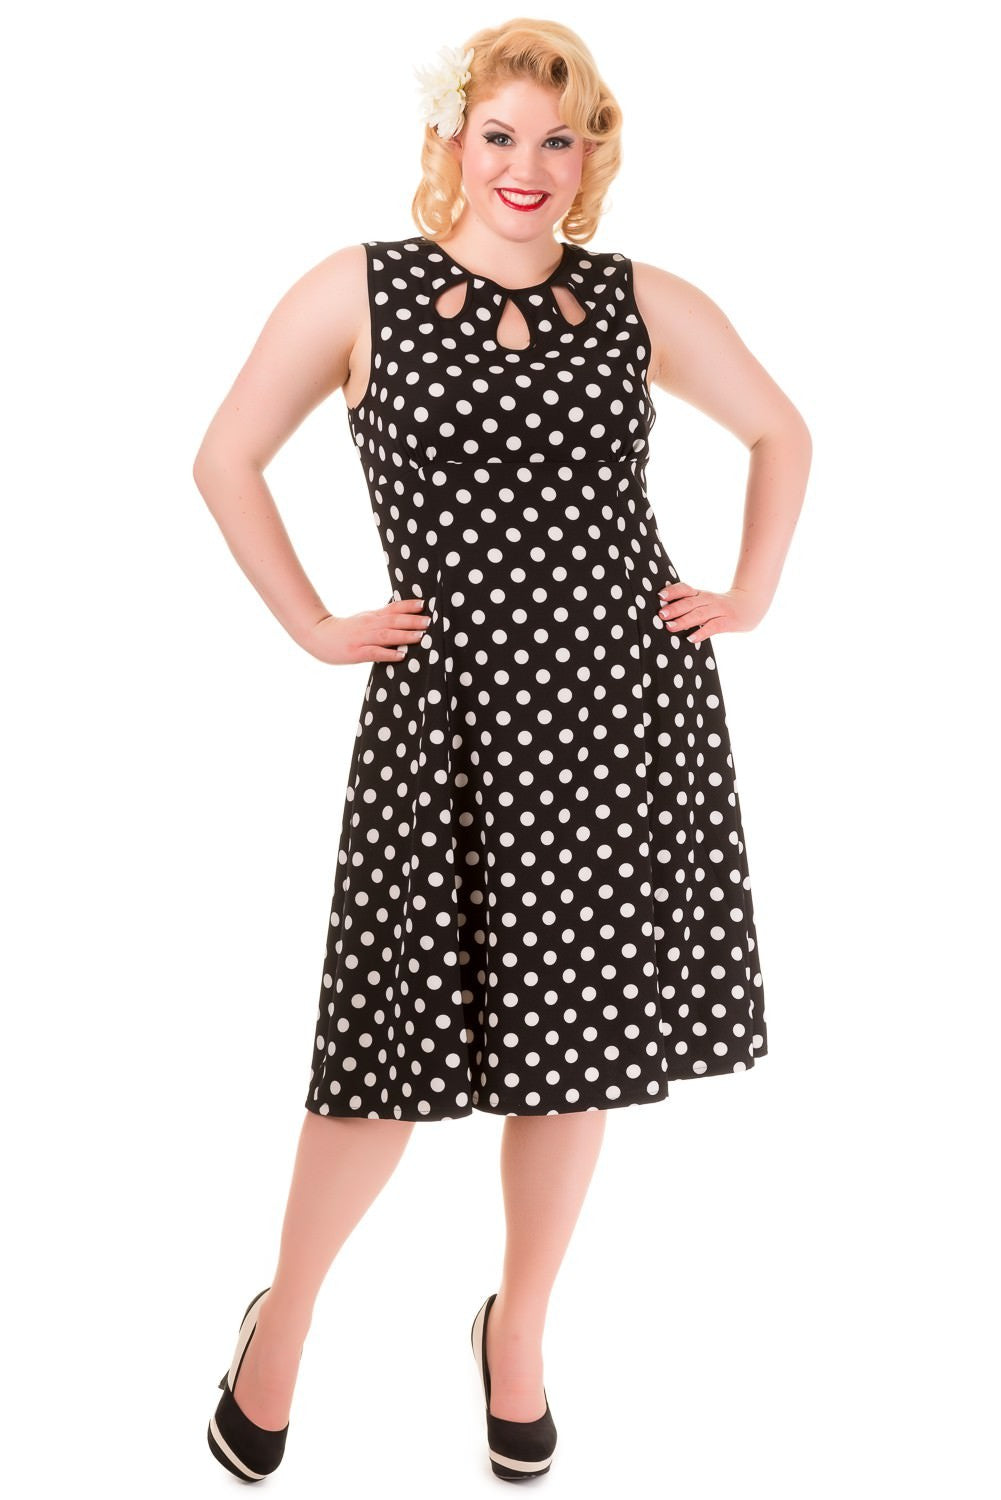 Vintage Style Polka Dot Sleveless Party Dress - SOLD OUT